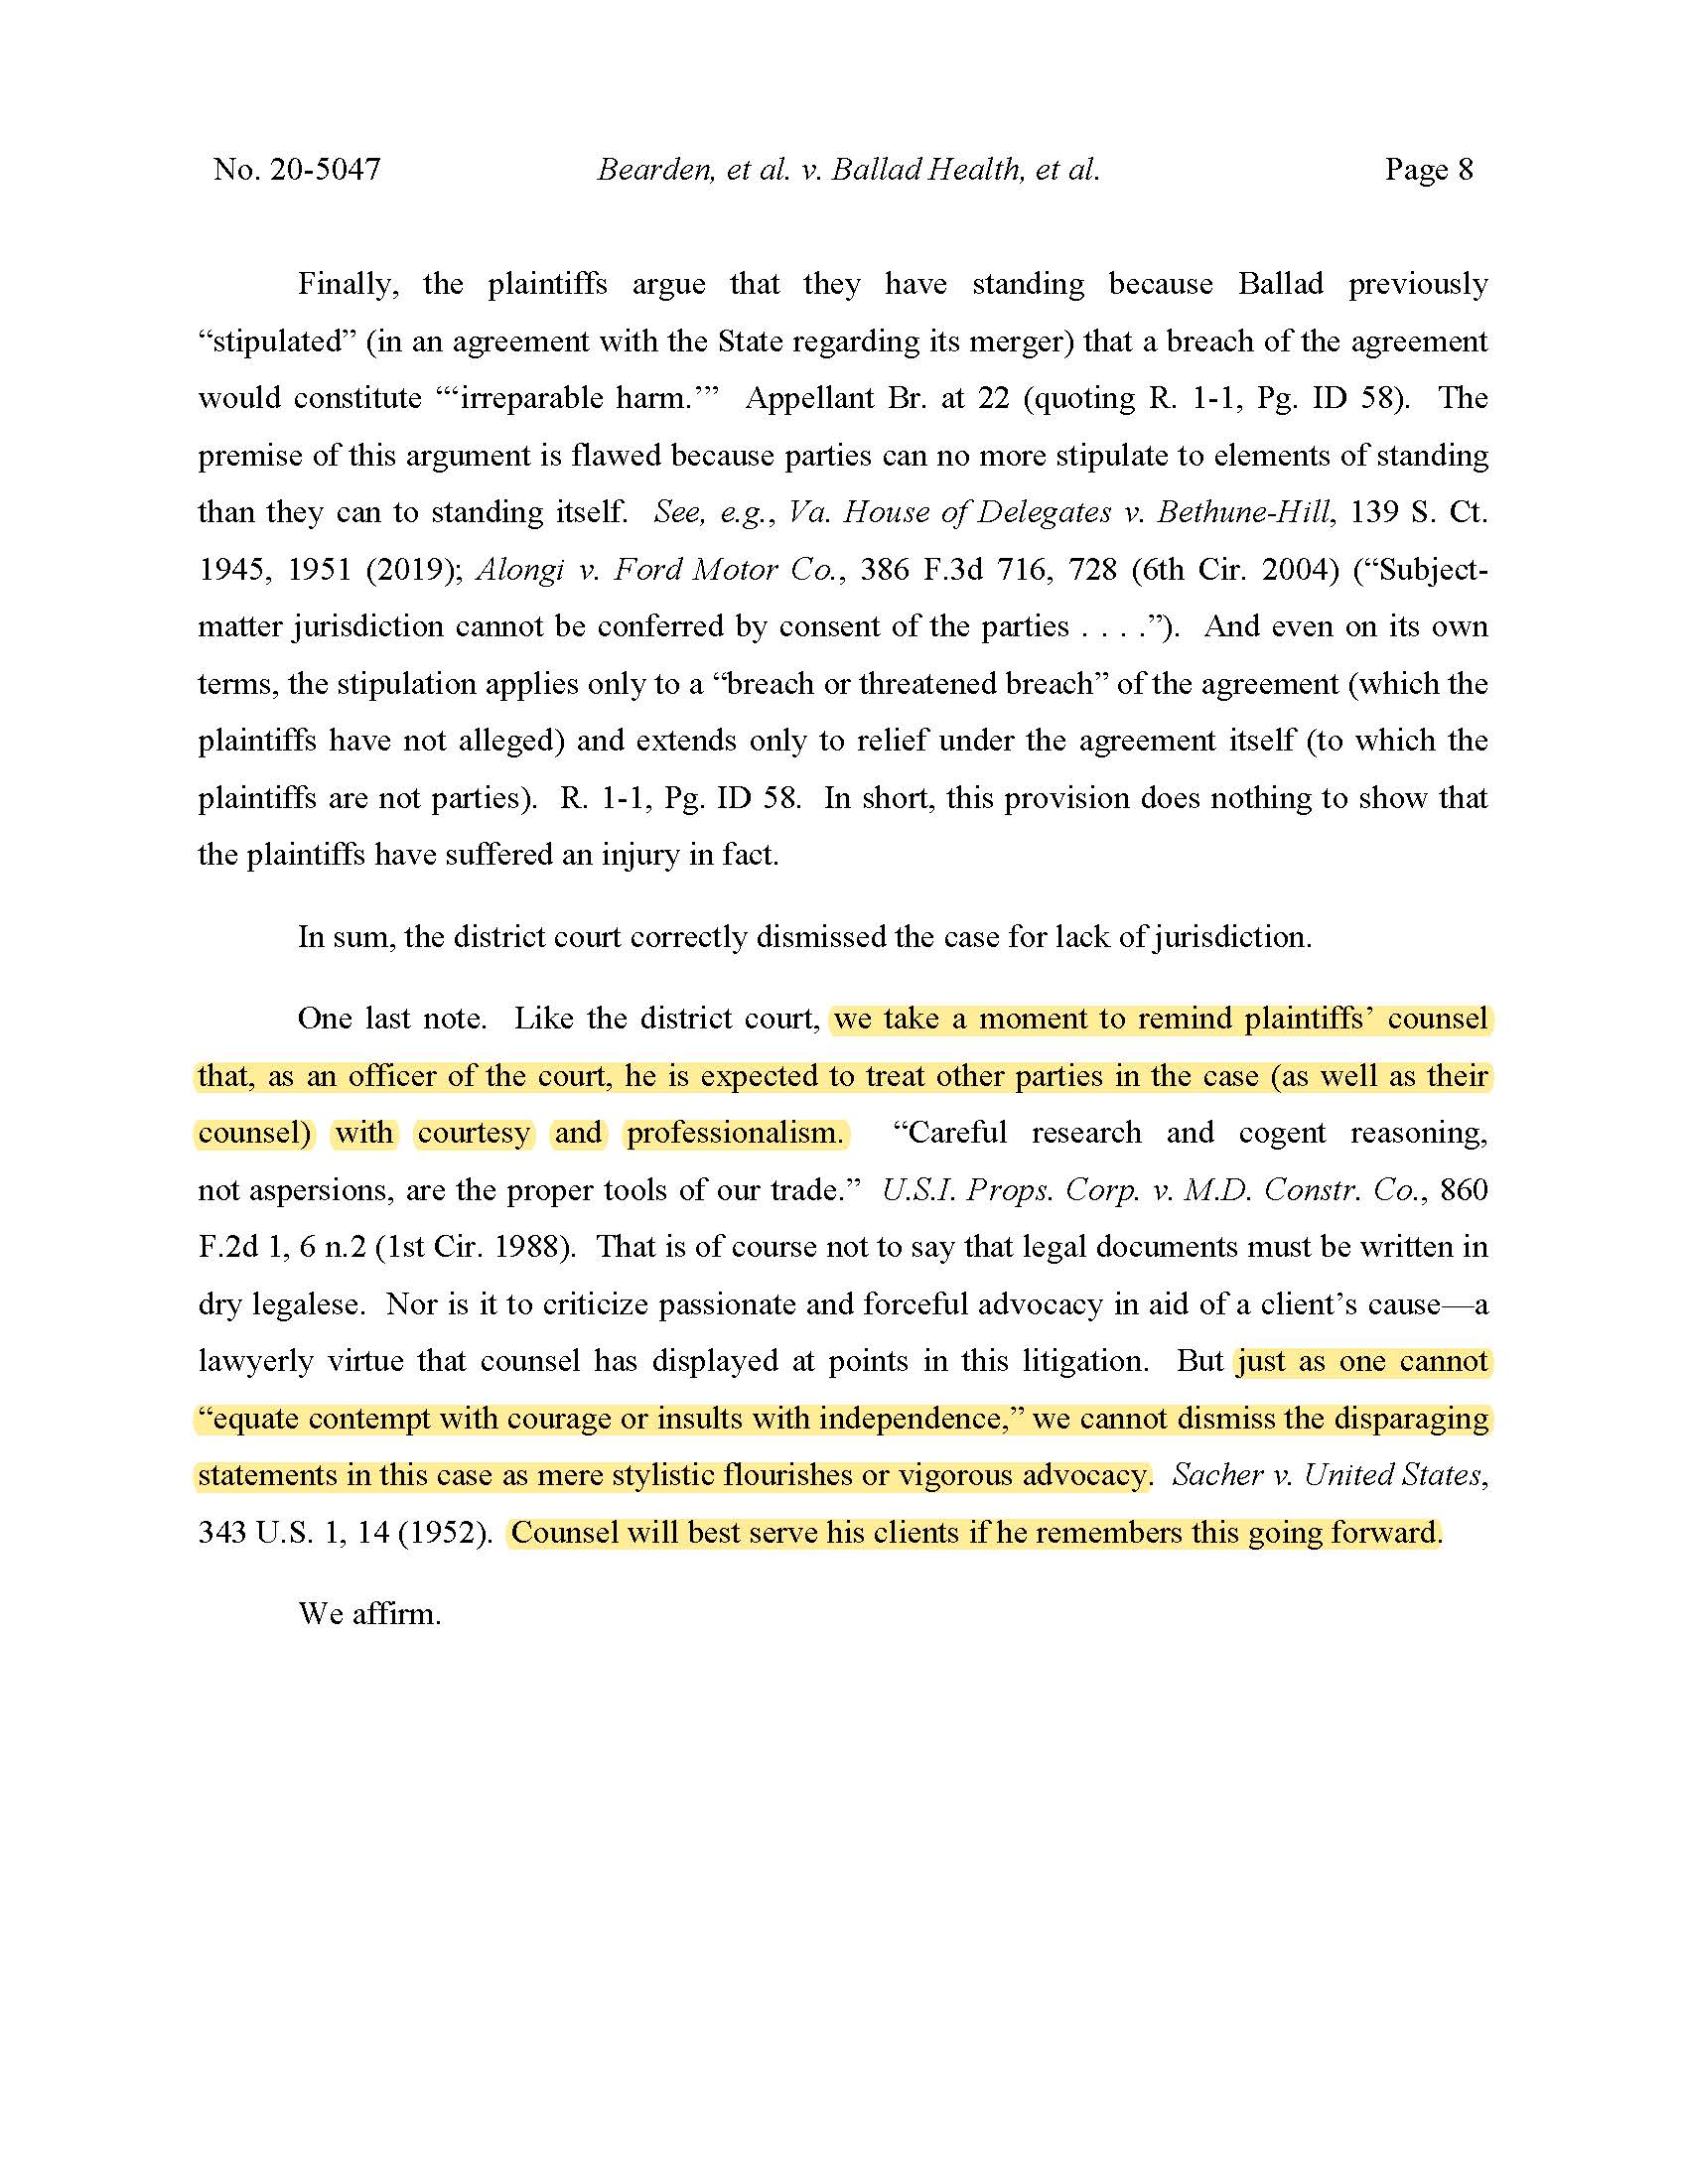 Page 8 of Bearden v. Ballard Health